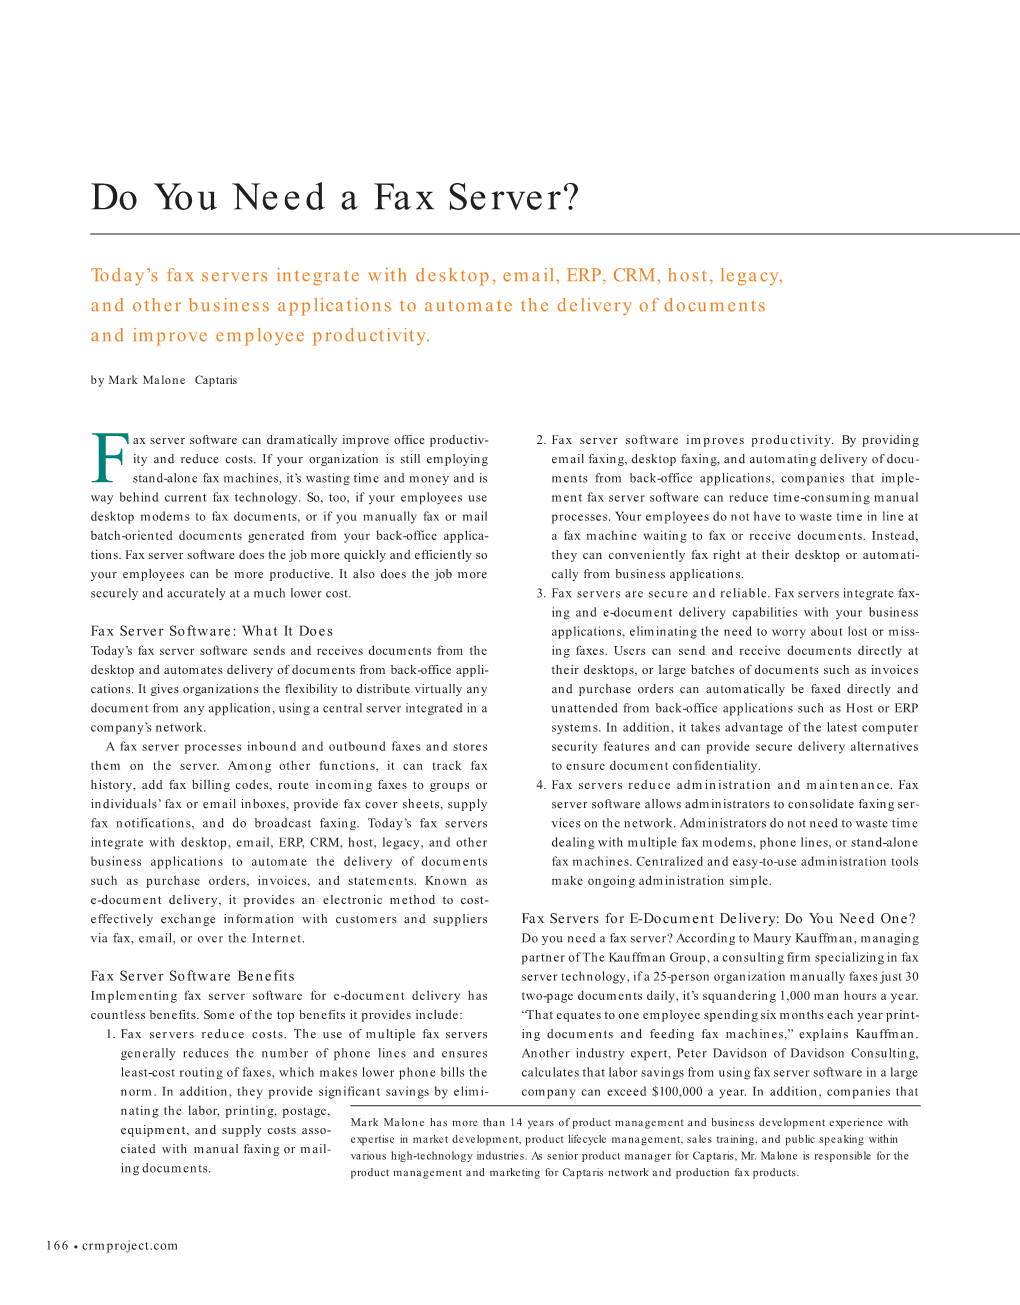 Do You Need a Fax Server?